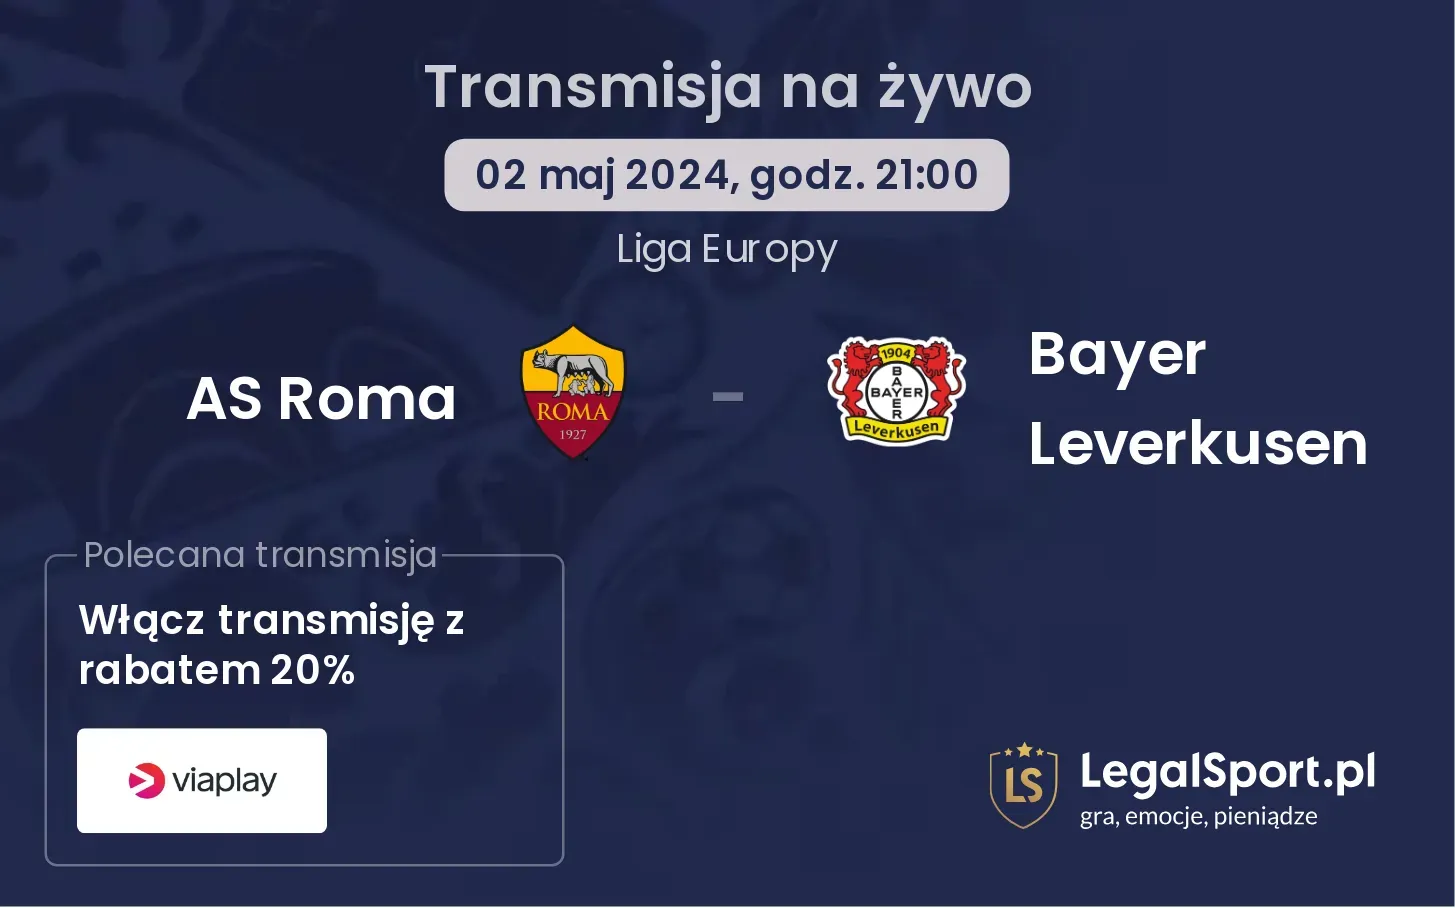 AS Roma - Bayer Leverkusen transmisja na żywo